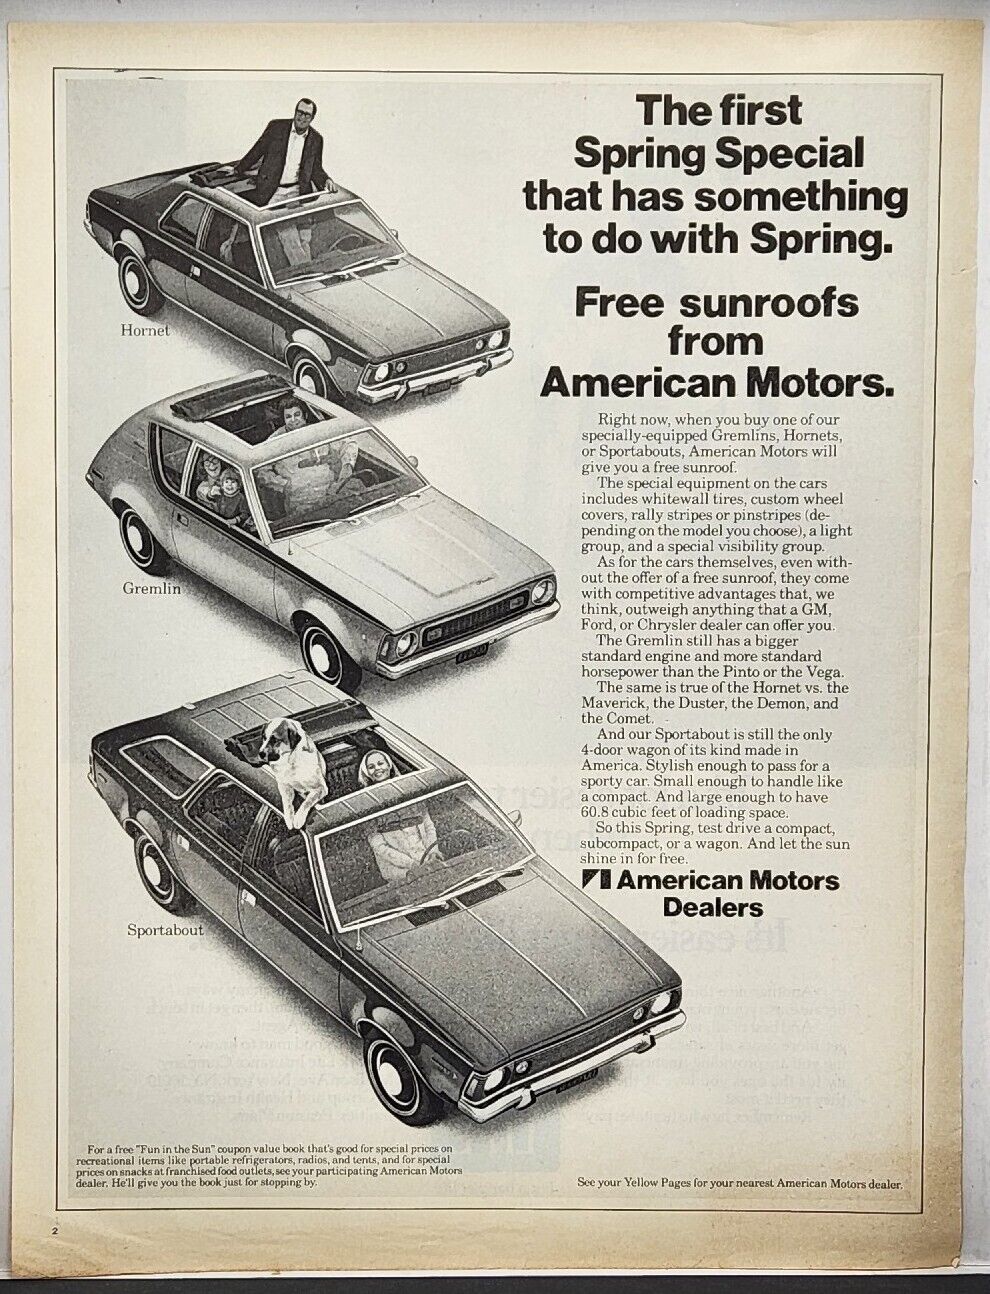 1971 American Motors Gremlin Hornet Sportabout Free Sunroofs Vintage Print Ad